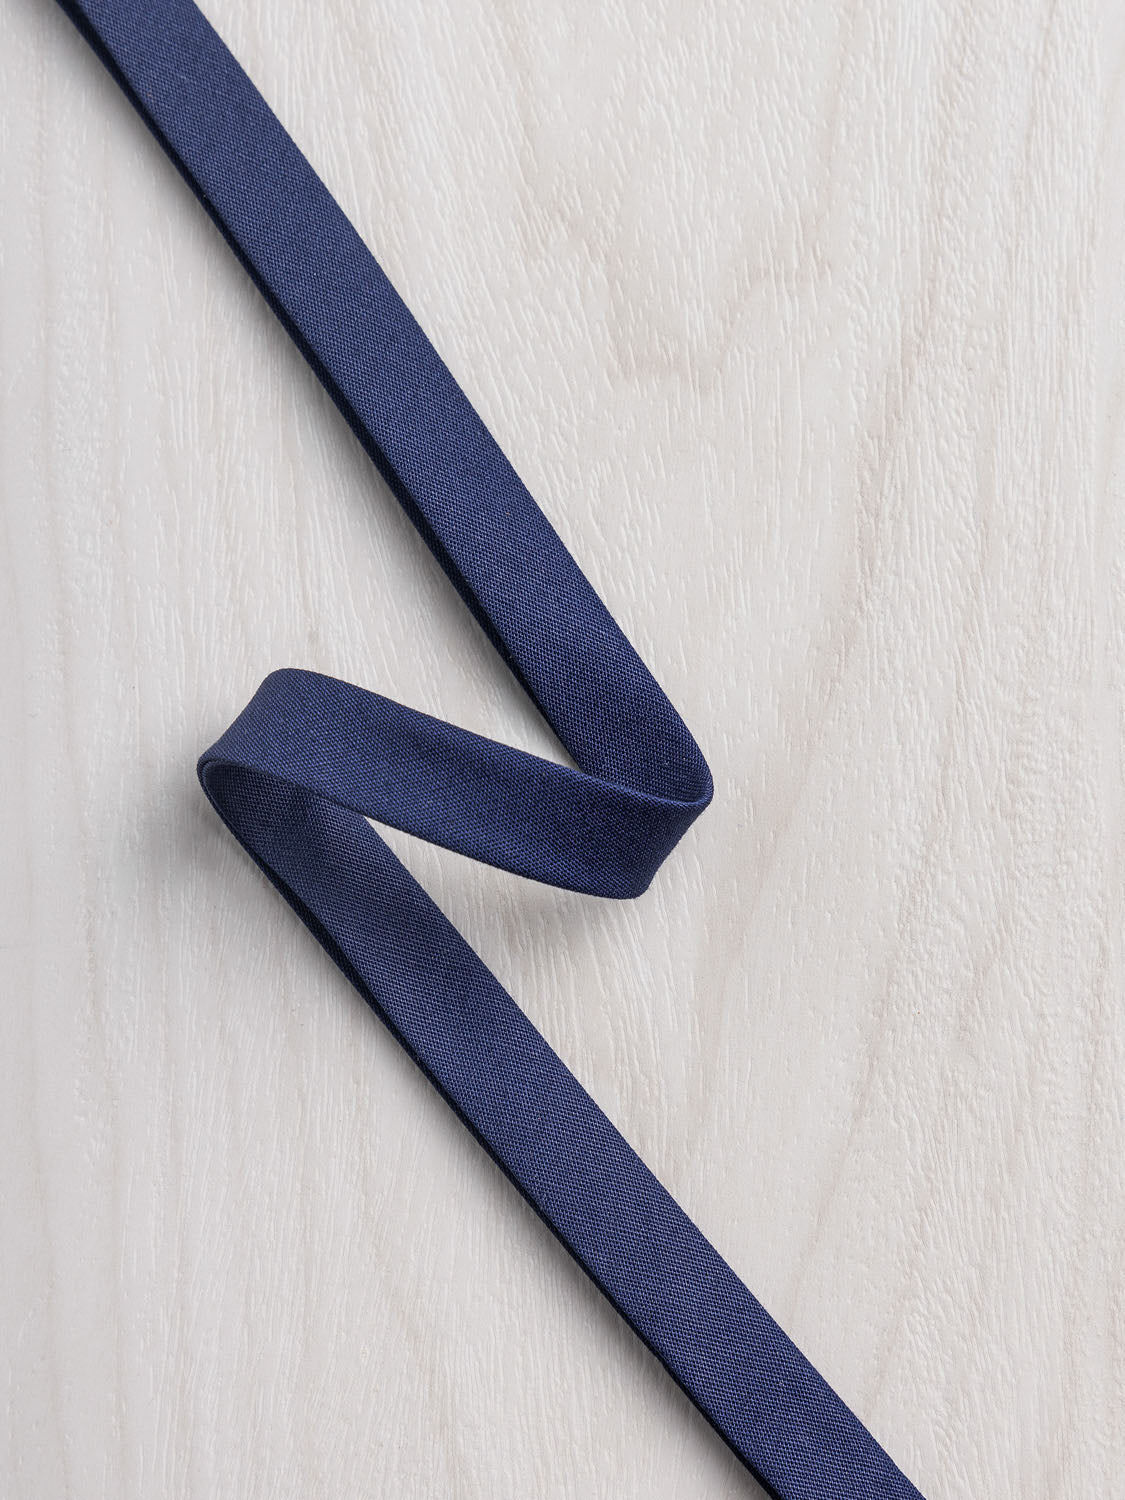 Double-Fold Cotton Poplin Bias Tape - 1/2' (13mm) wide - Navy | Core Fabrics